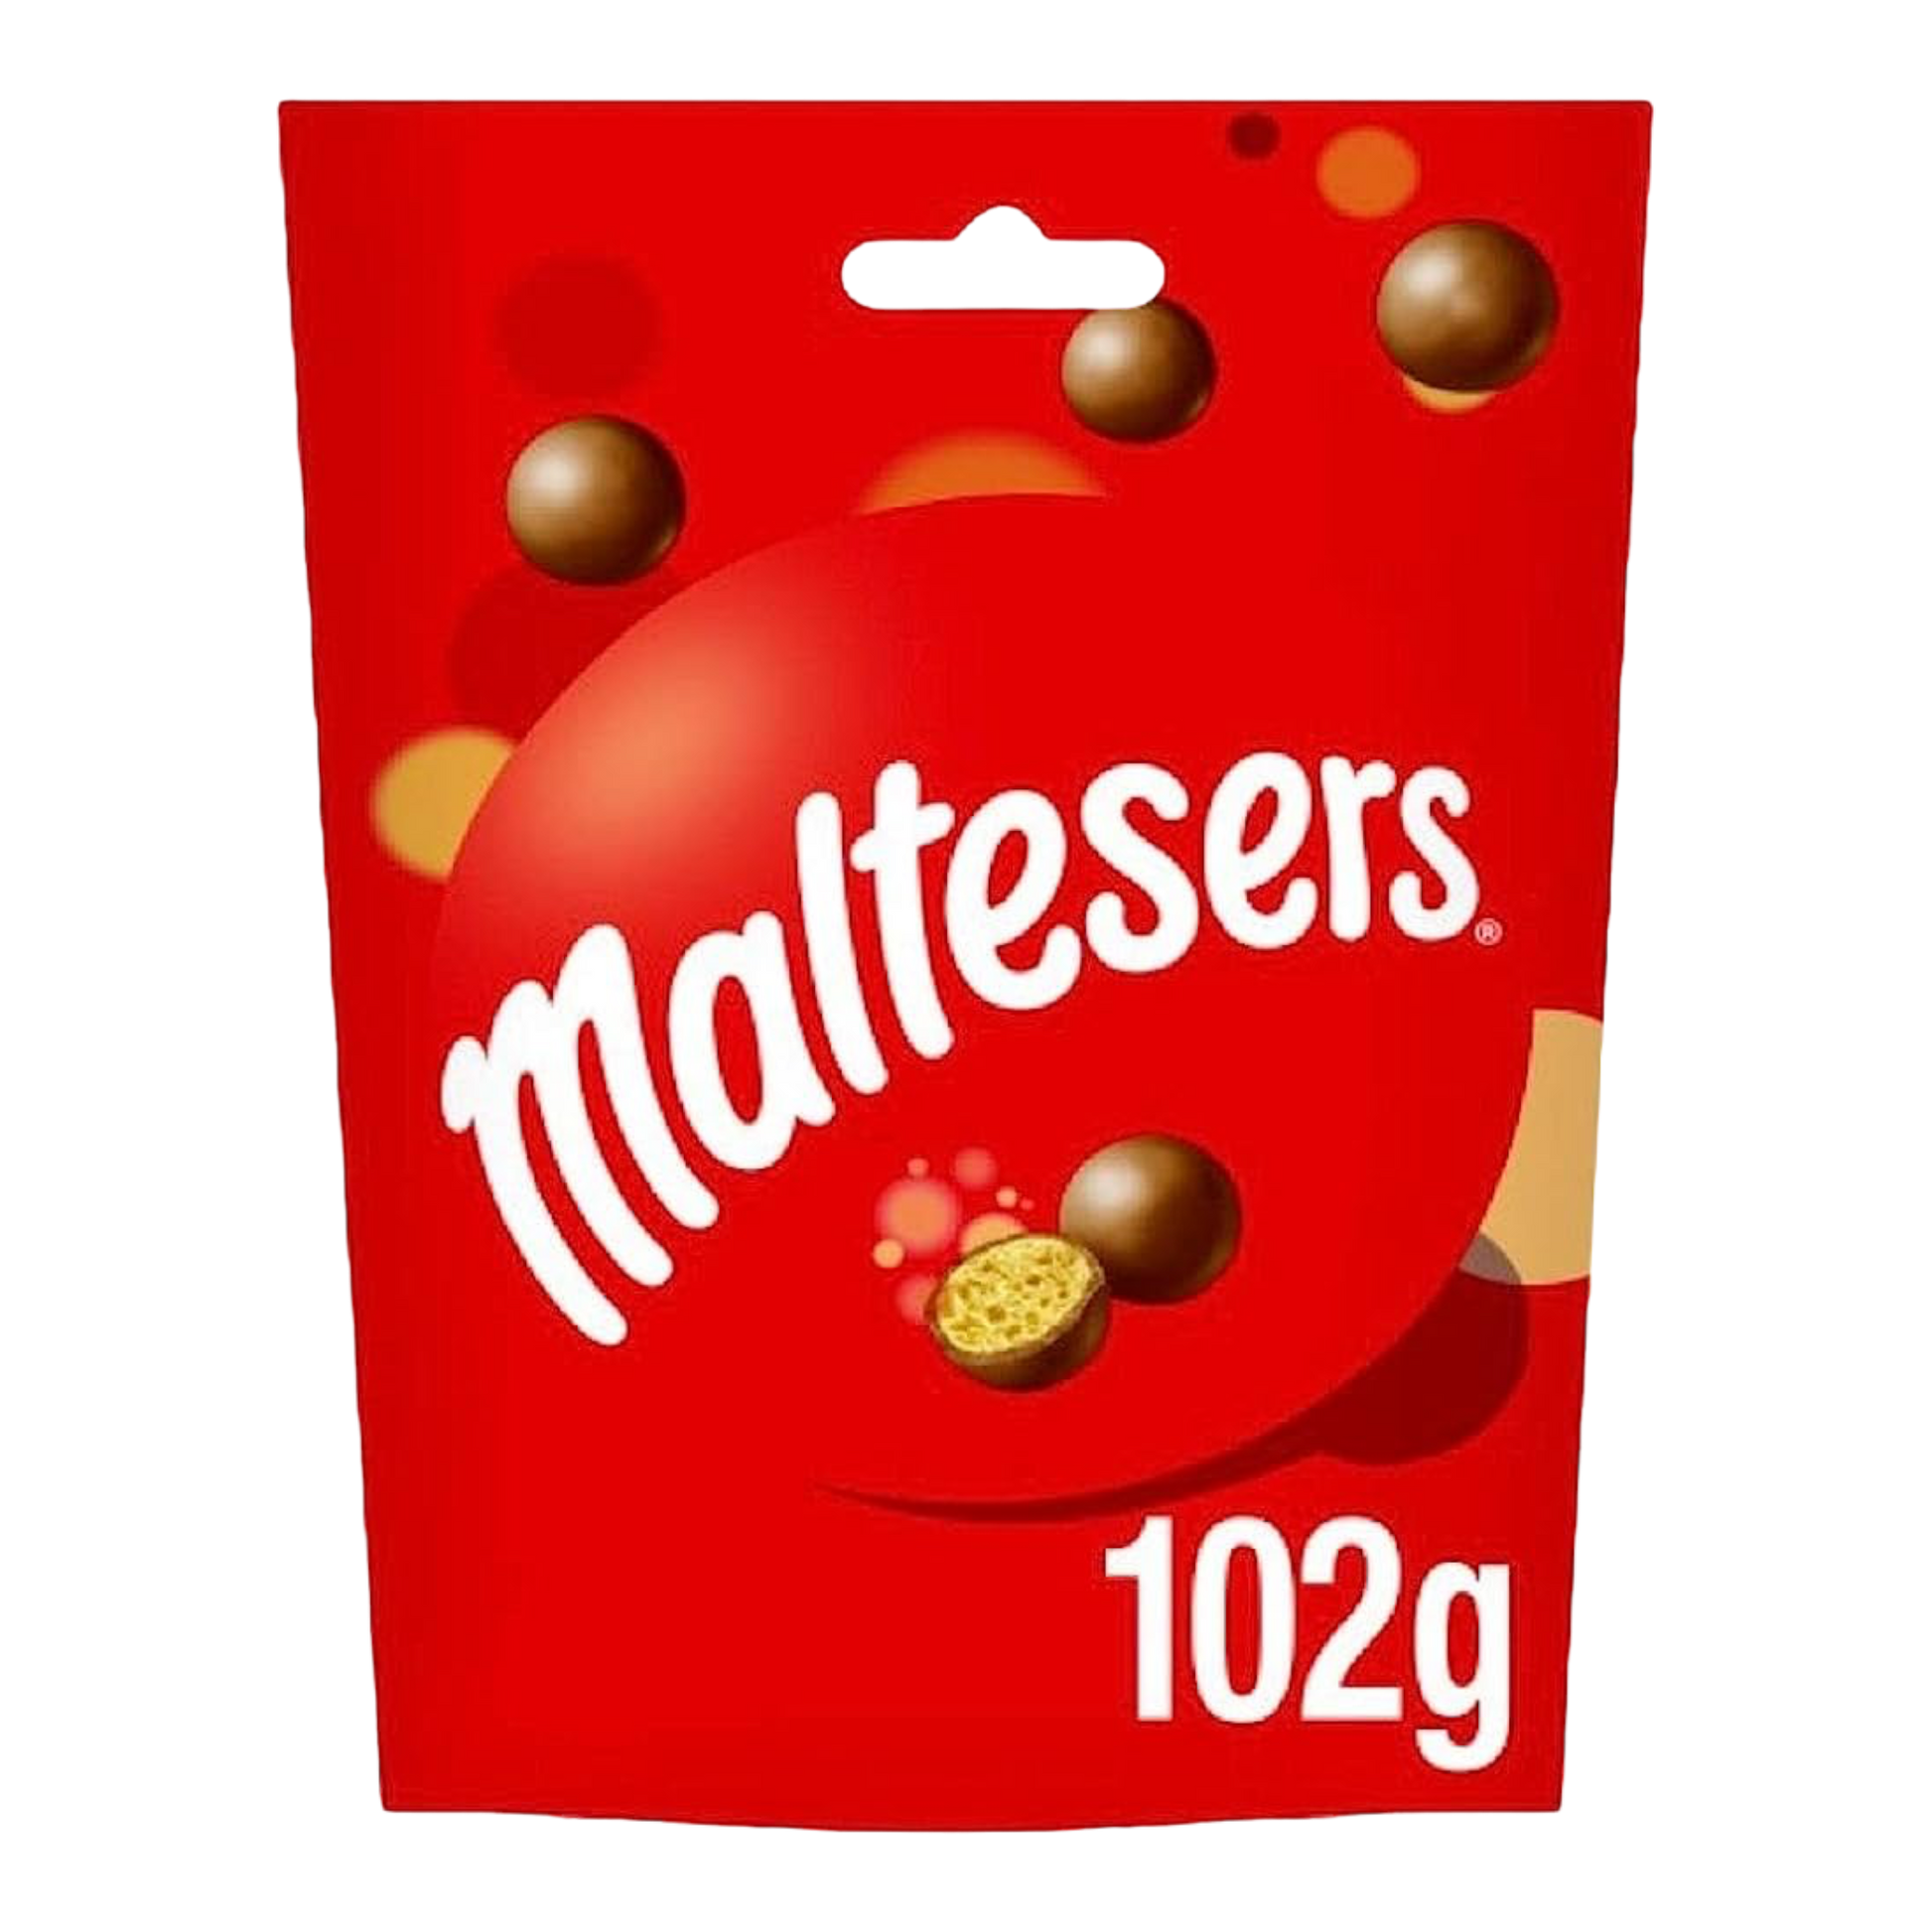 1/2 Kilo of Maltesers (6 Bags of 85g)